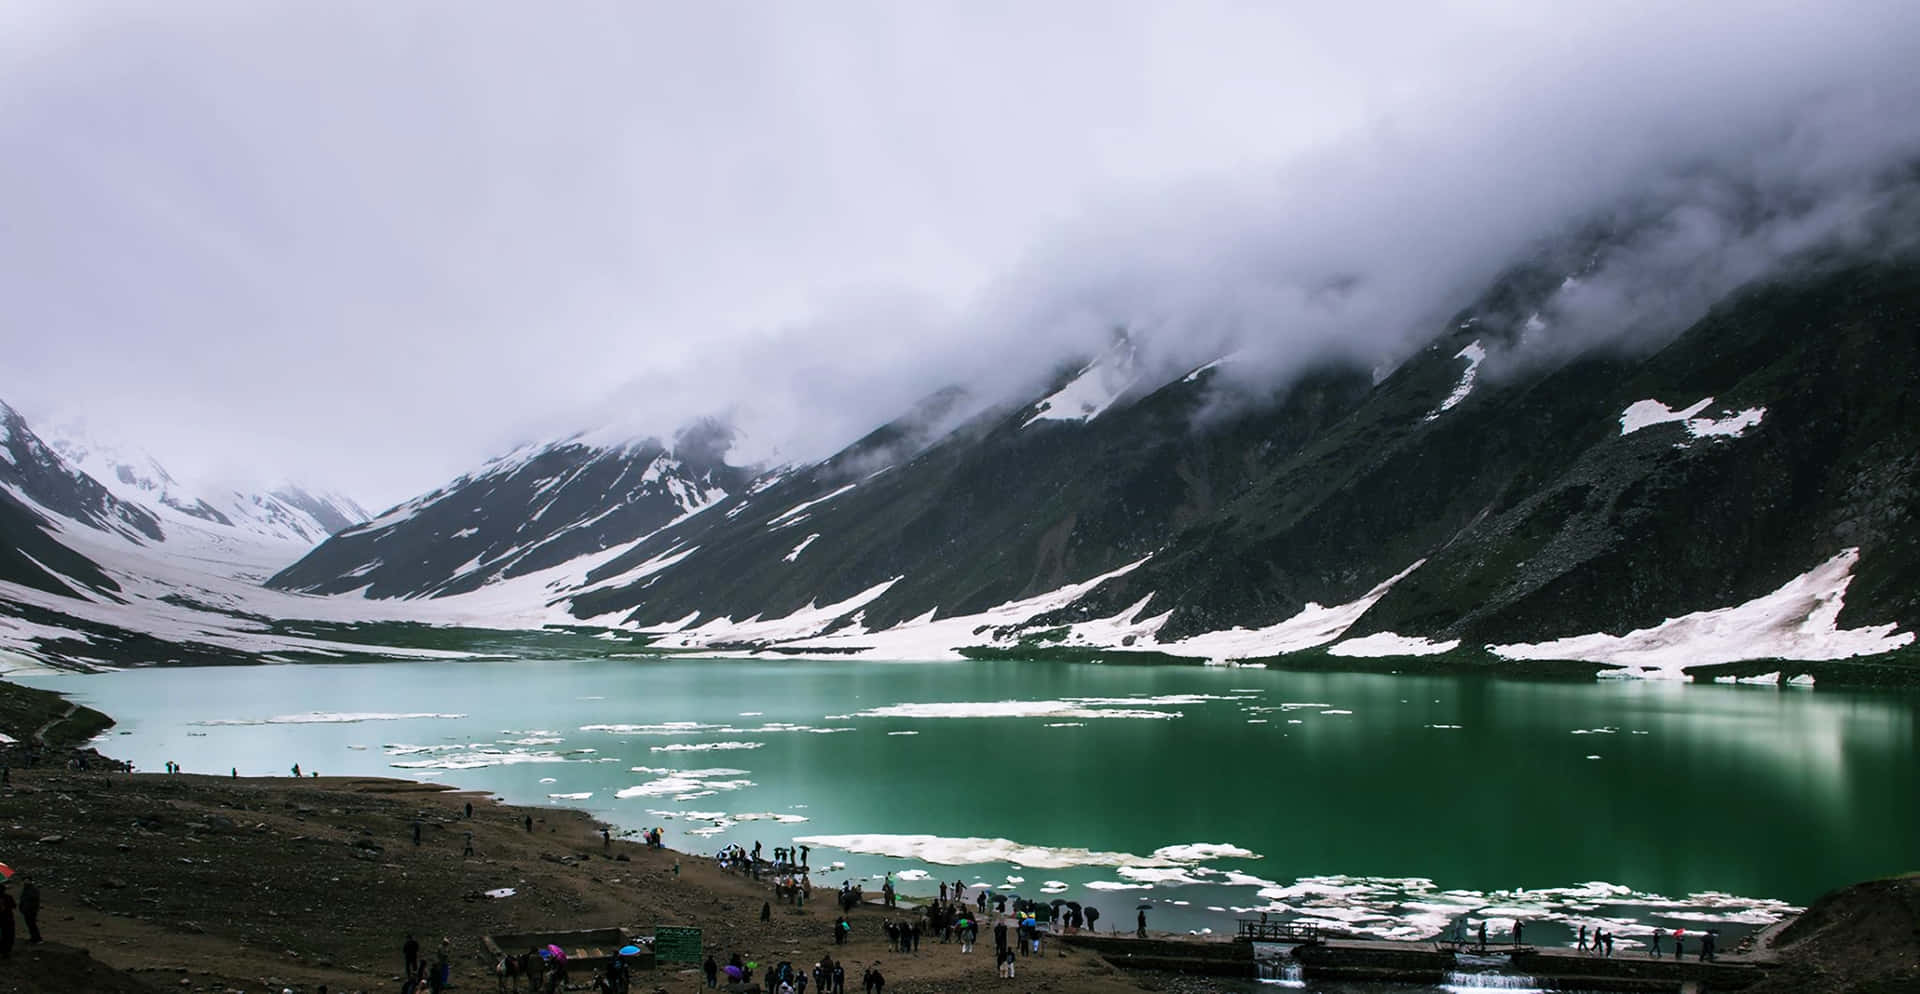 Breathtaking view of the Karakoram Mountain Range in Pakistan